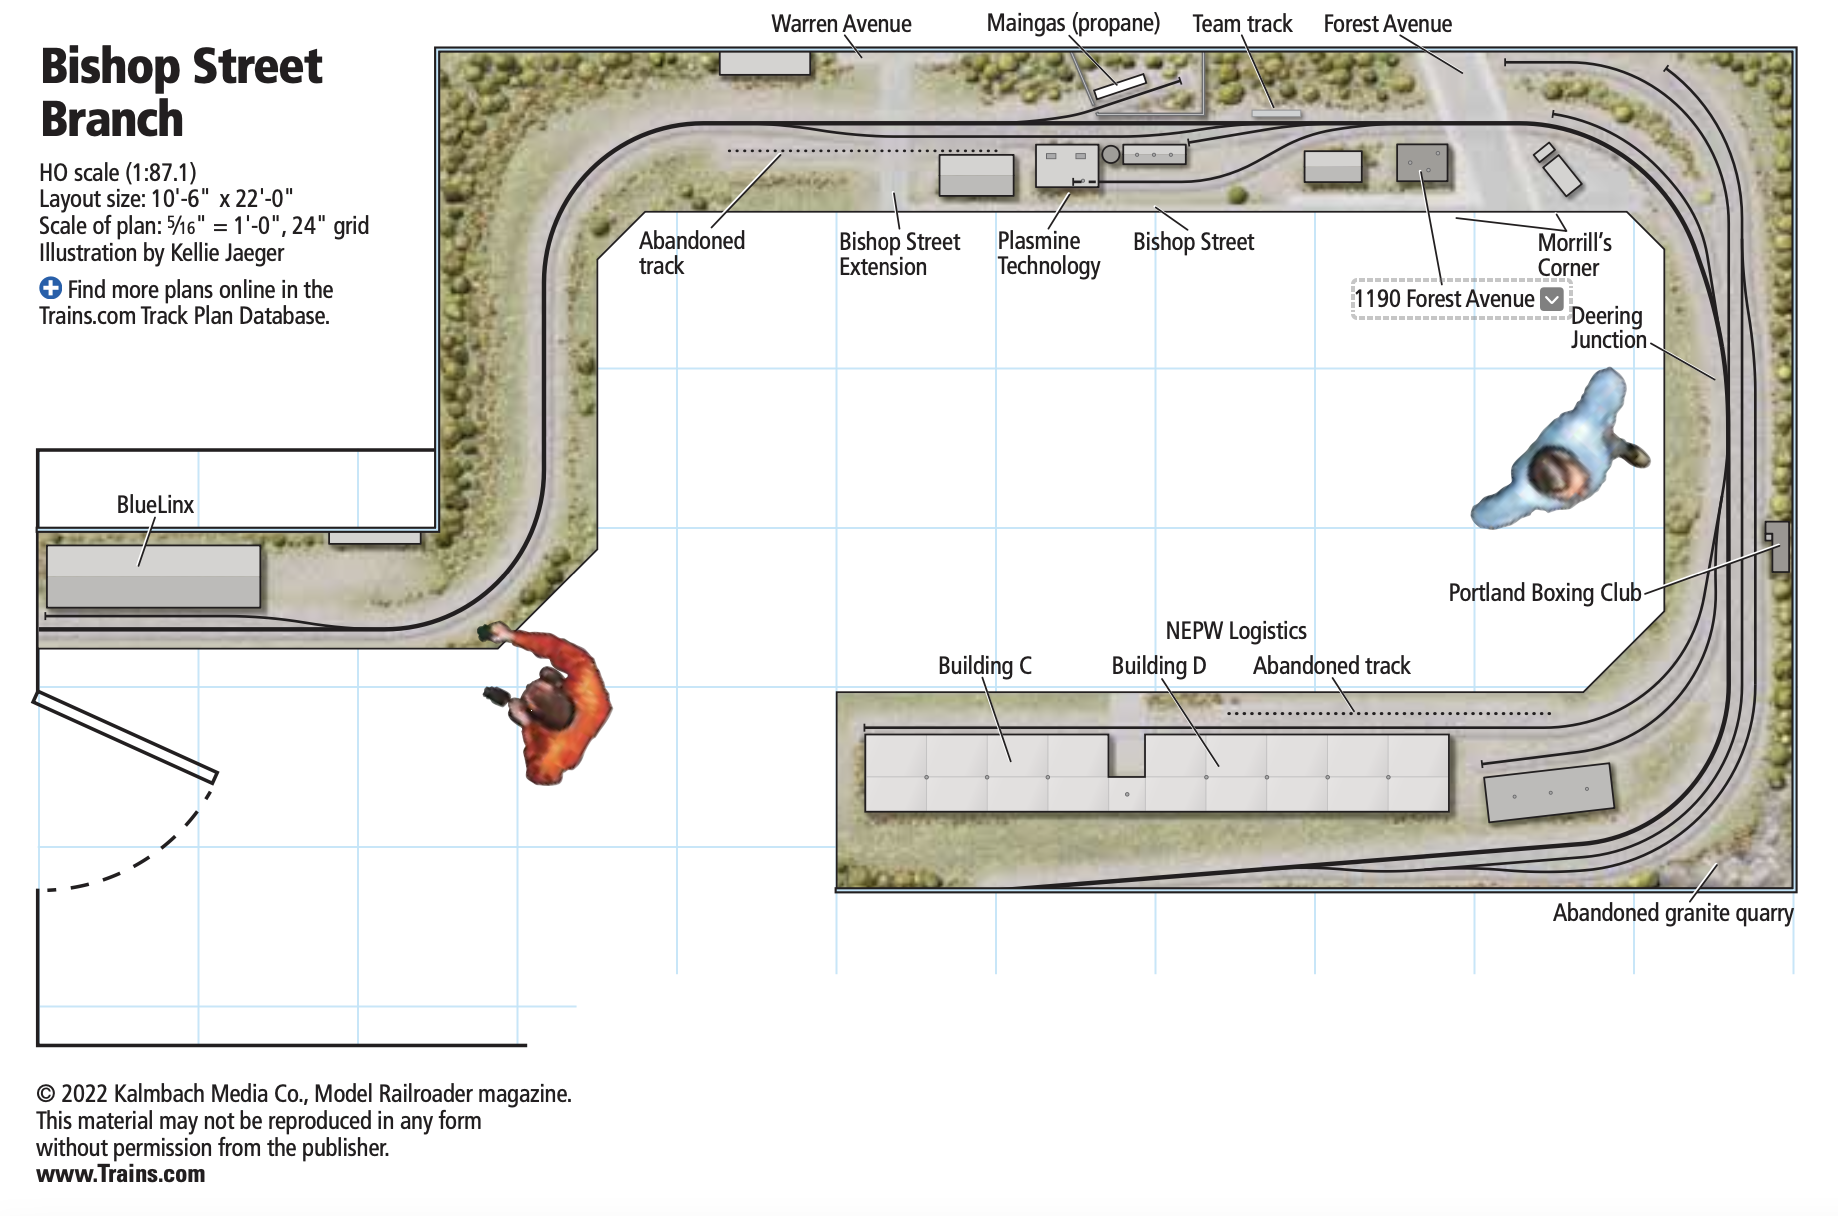 The Bishop Street Branch layout track plan